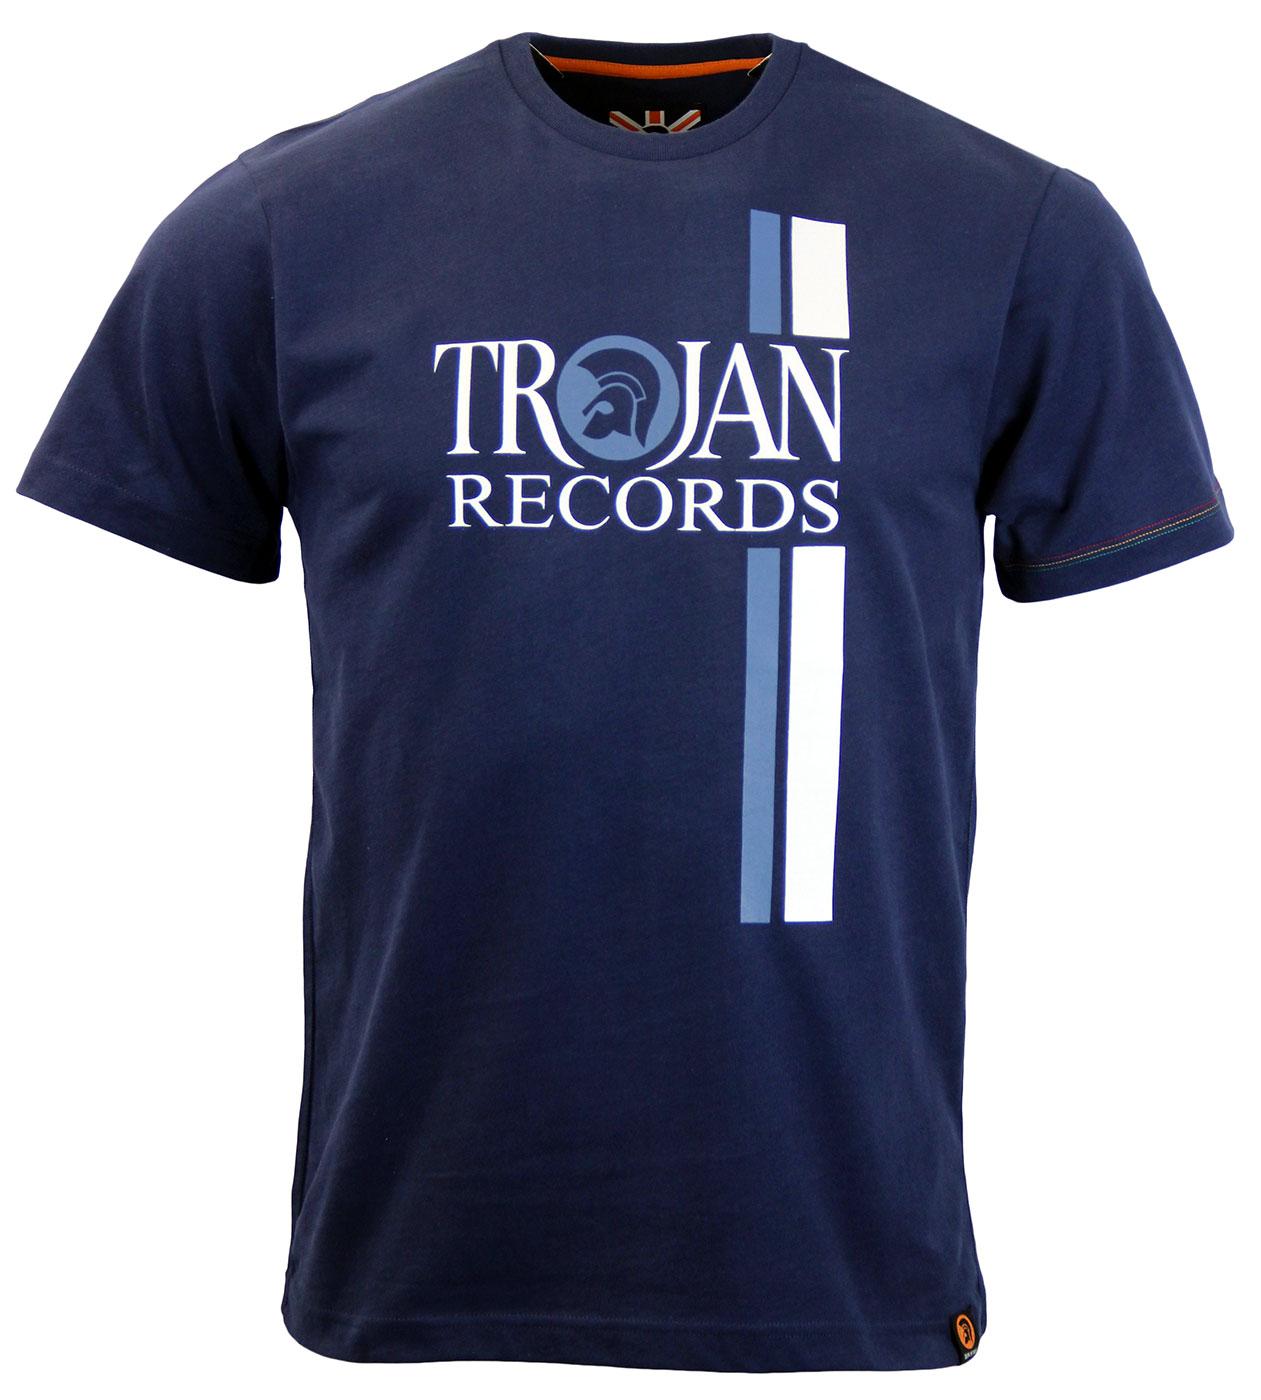 TROJAN Retro Mod Ska Racing Stripe Logo T-shirt N